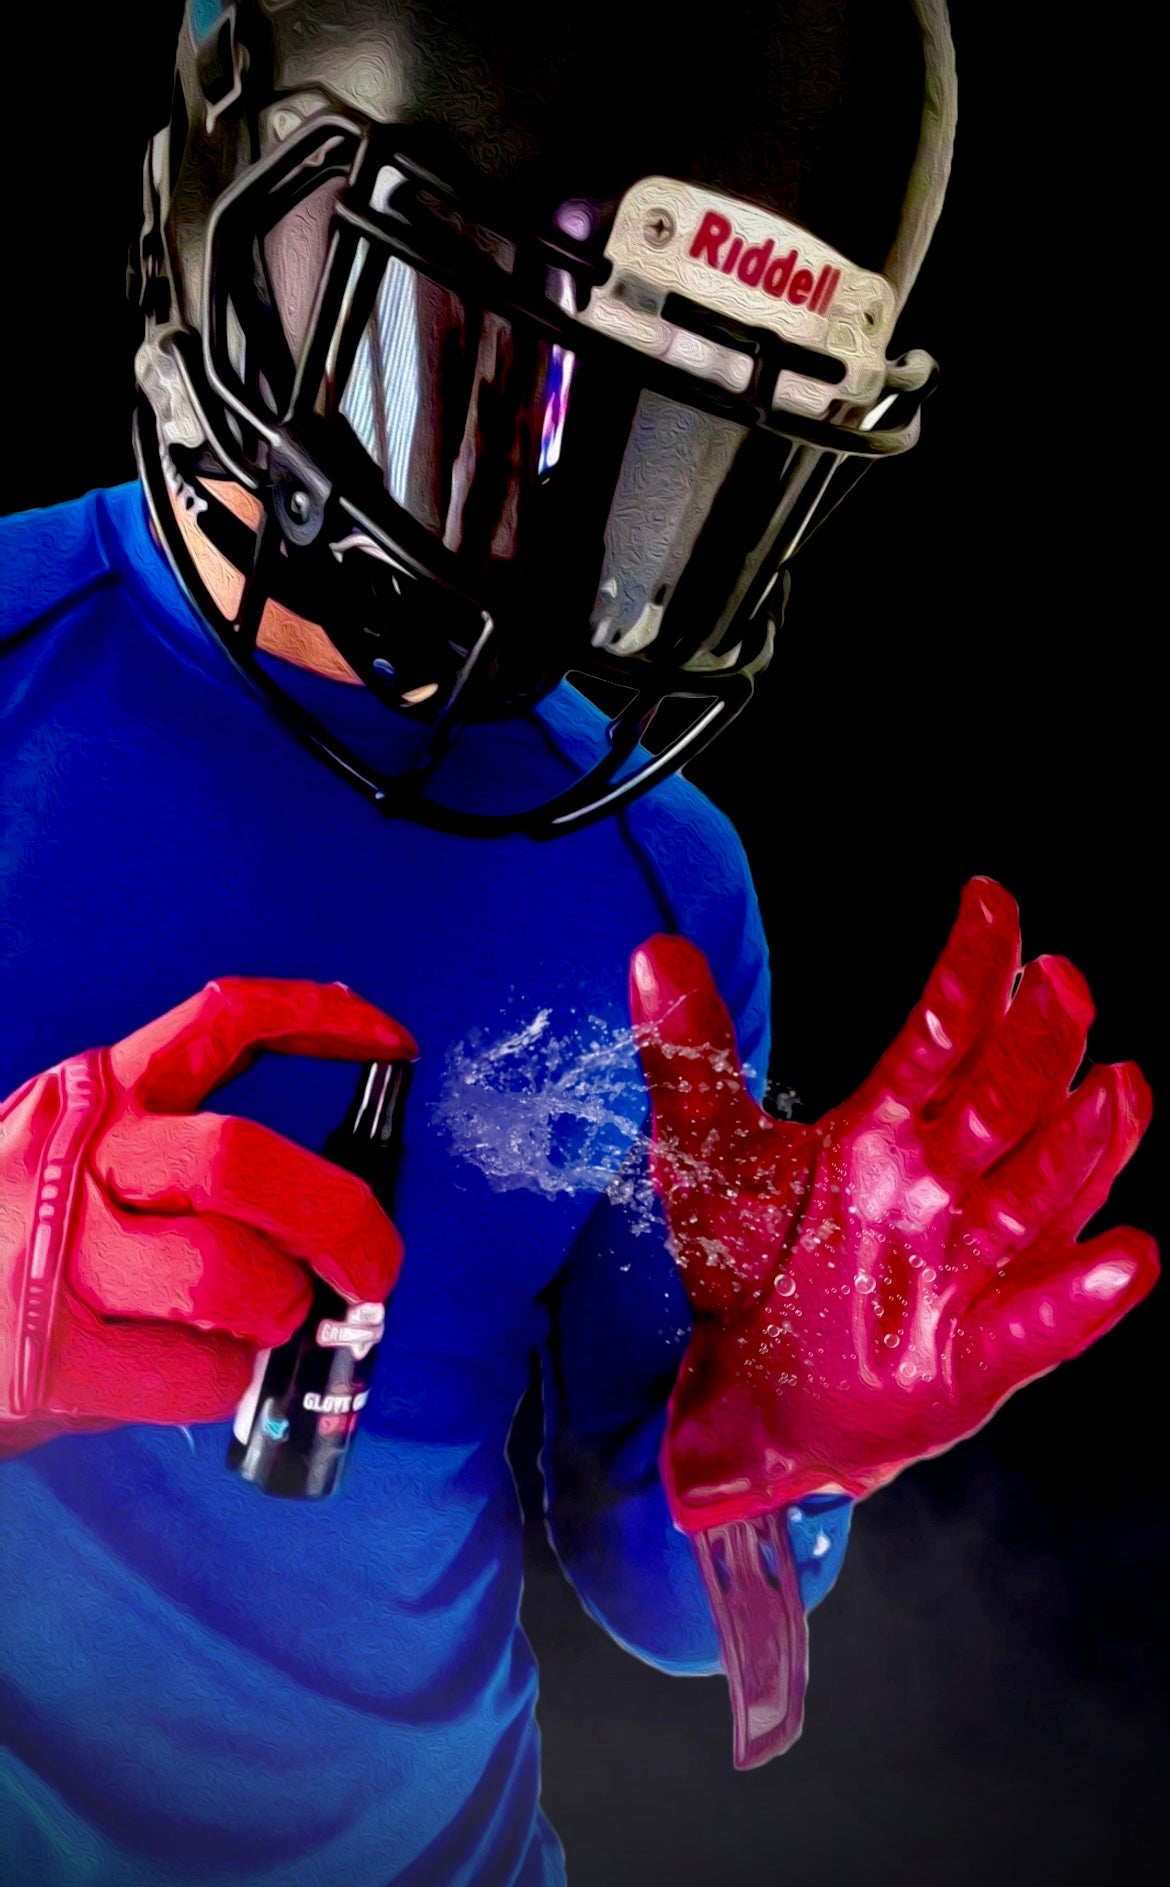 (A) NanoTek Football Glove Grip Spray